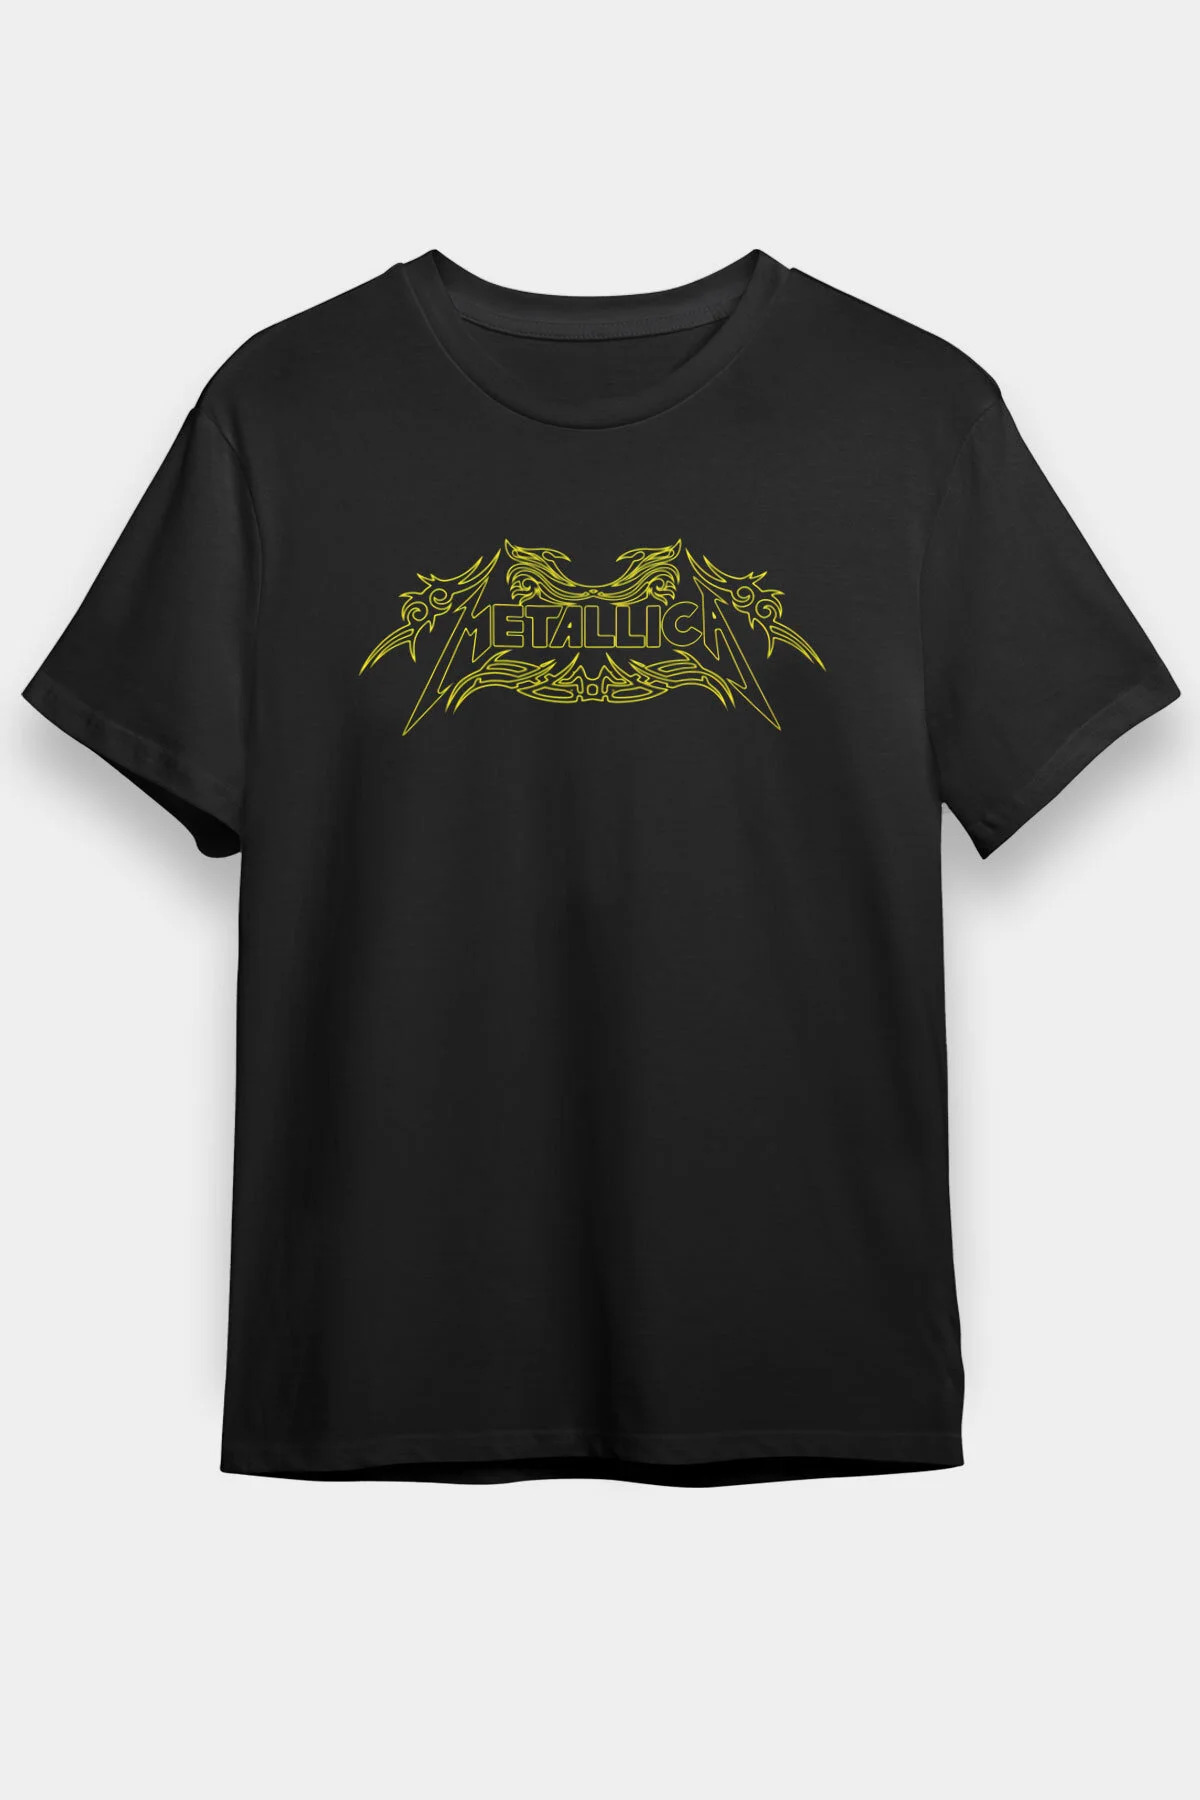 Metallica T shirt, Music Band ,Unisex Tshirt 22/